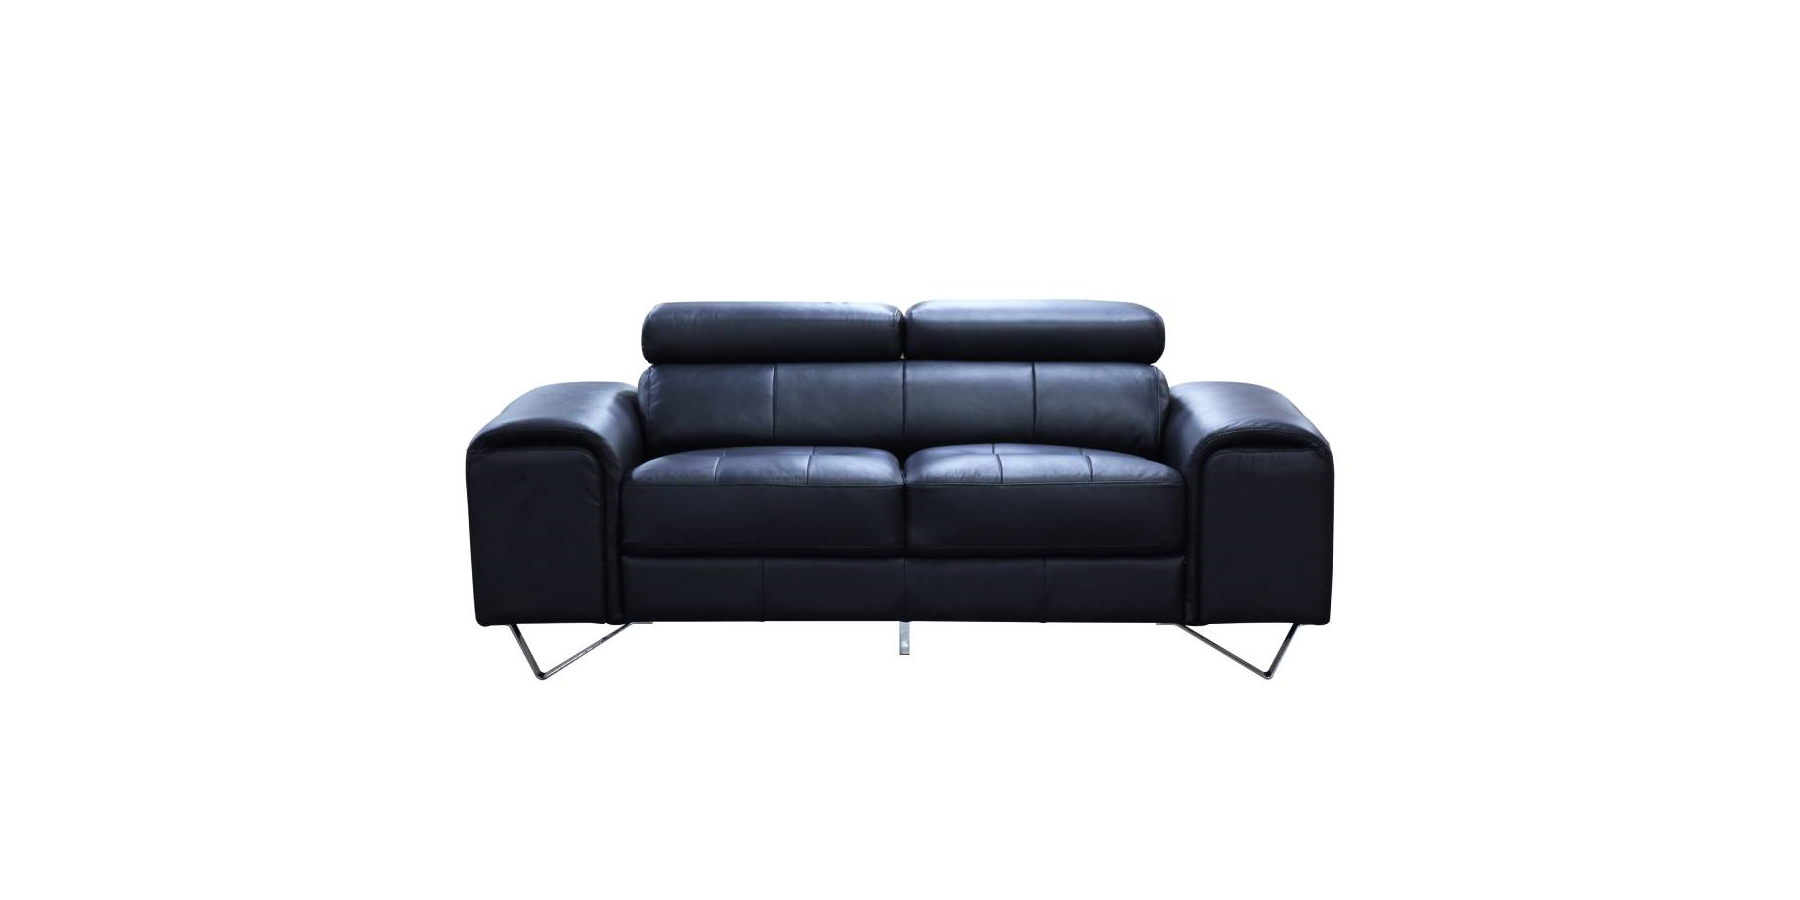 Bellagio Leather 2 Seater Sofa - Black